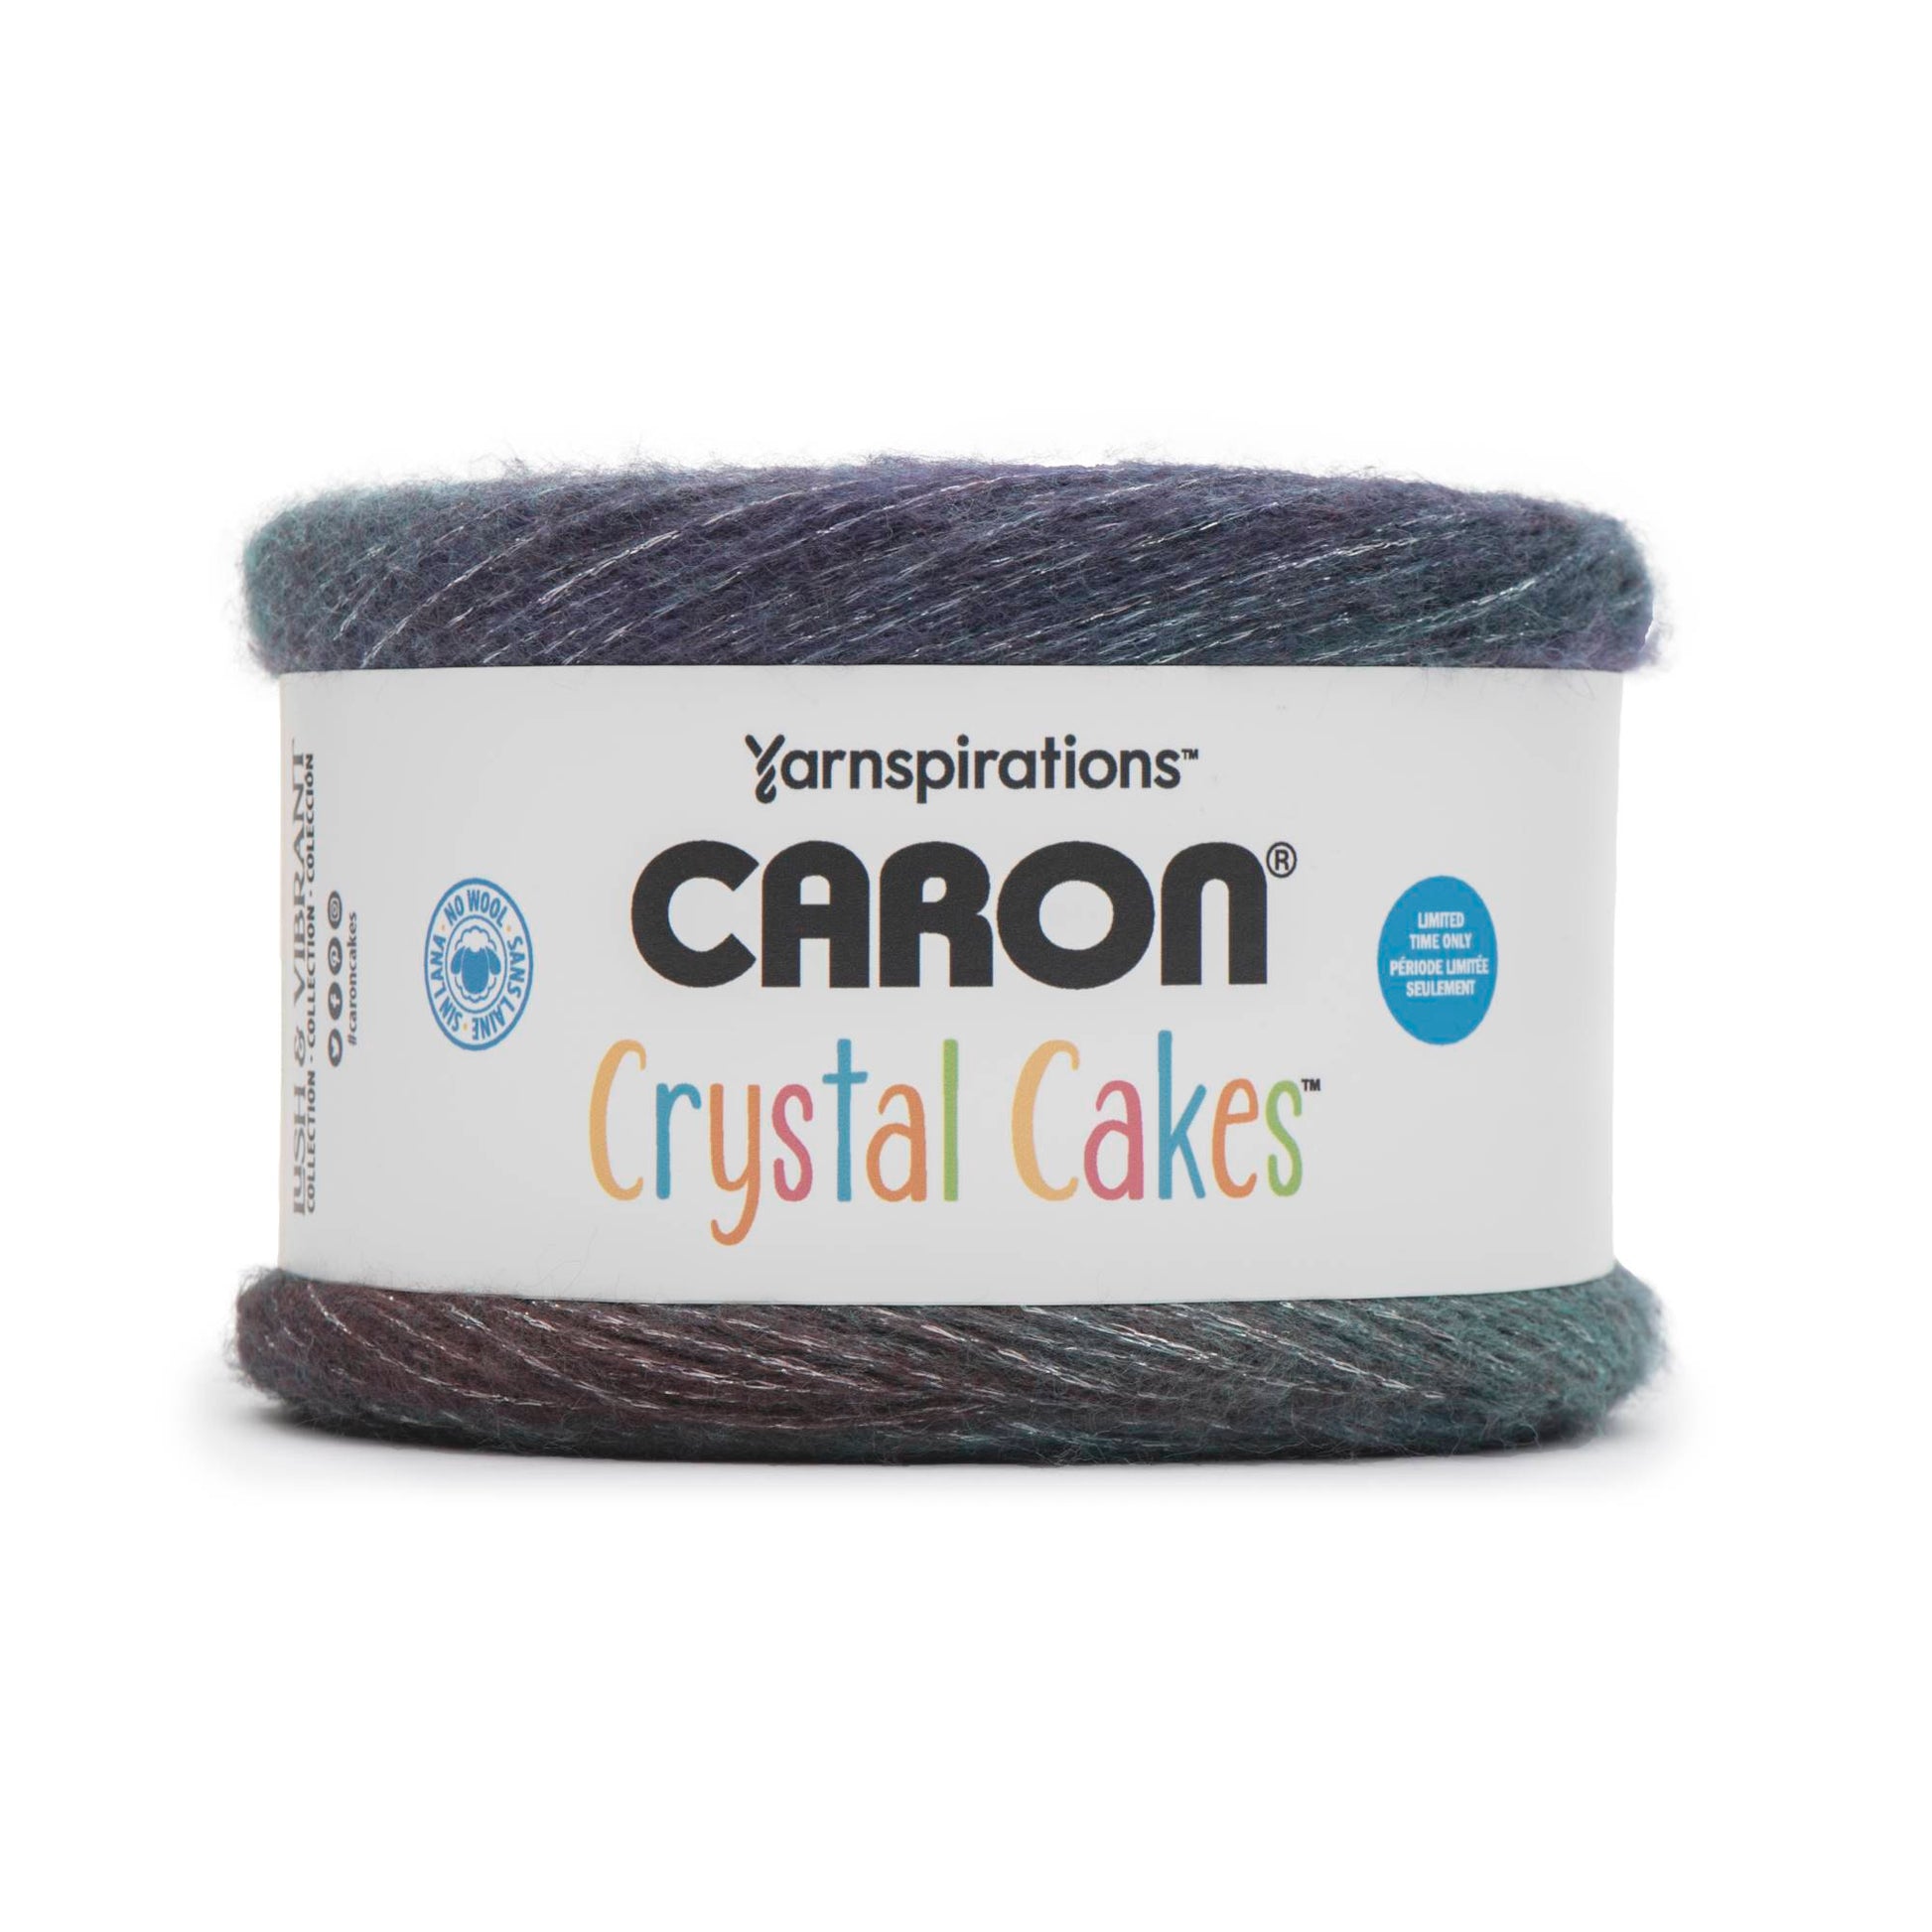 Caron Crystal Cakes Yarn (240g/8.5oz) - Discontinued shades